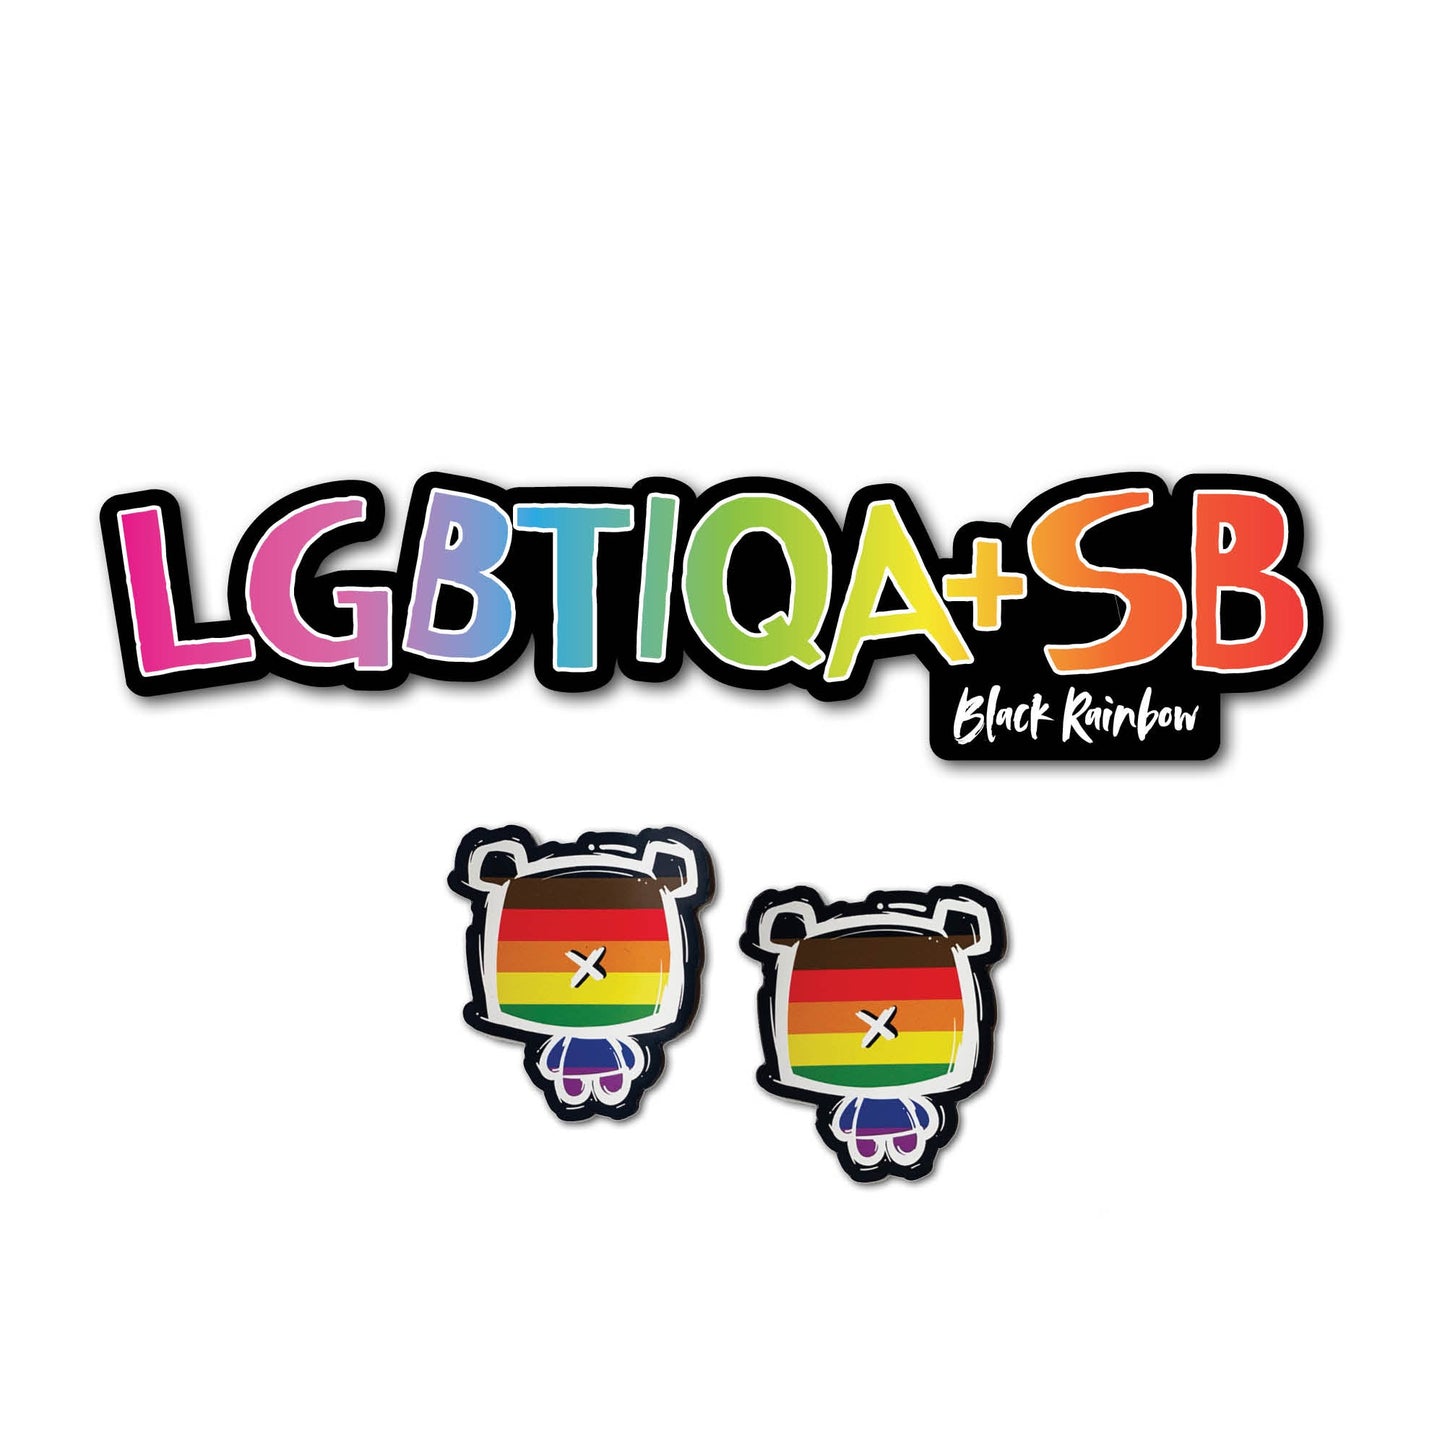 Black Rainbow's What is LGBTIQA+SB? Tea Towel + Badges